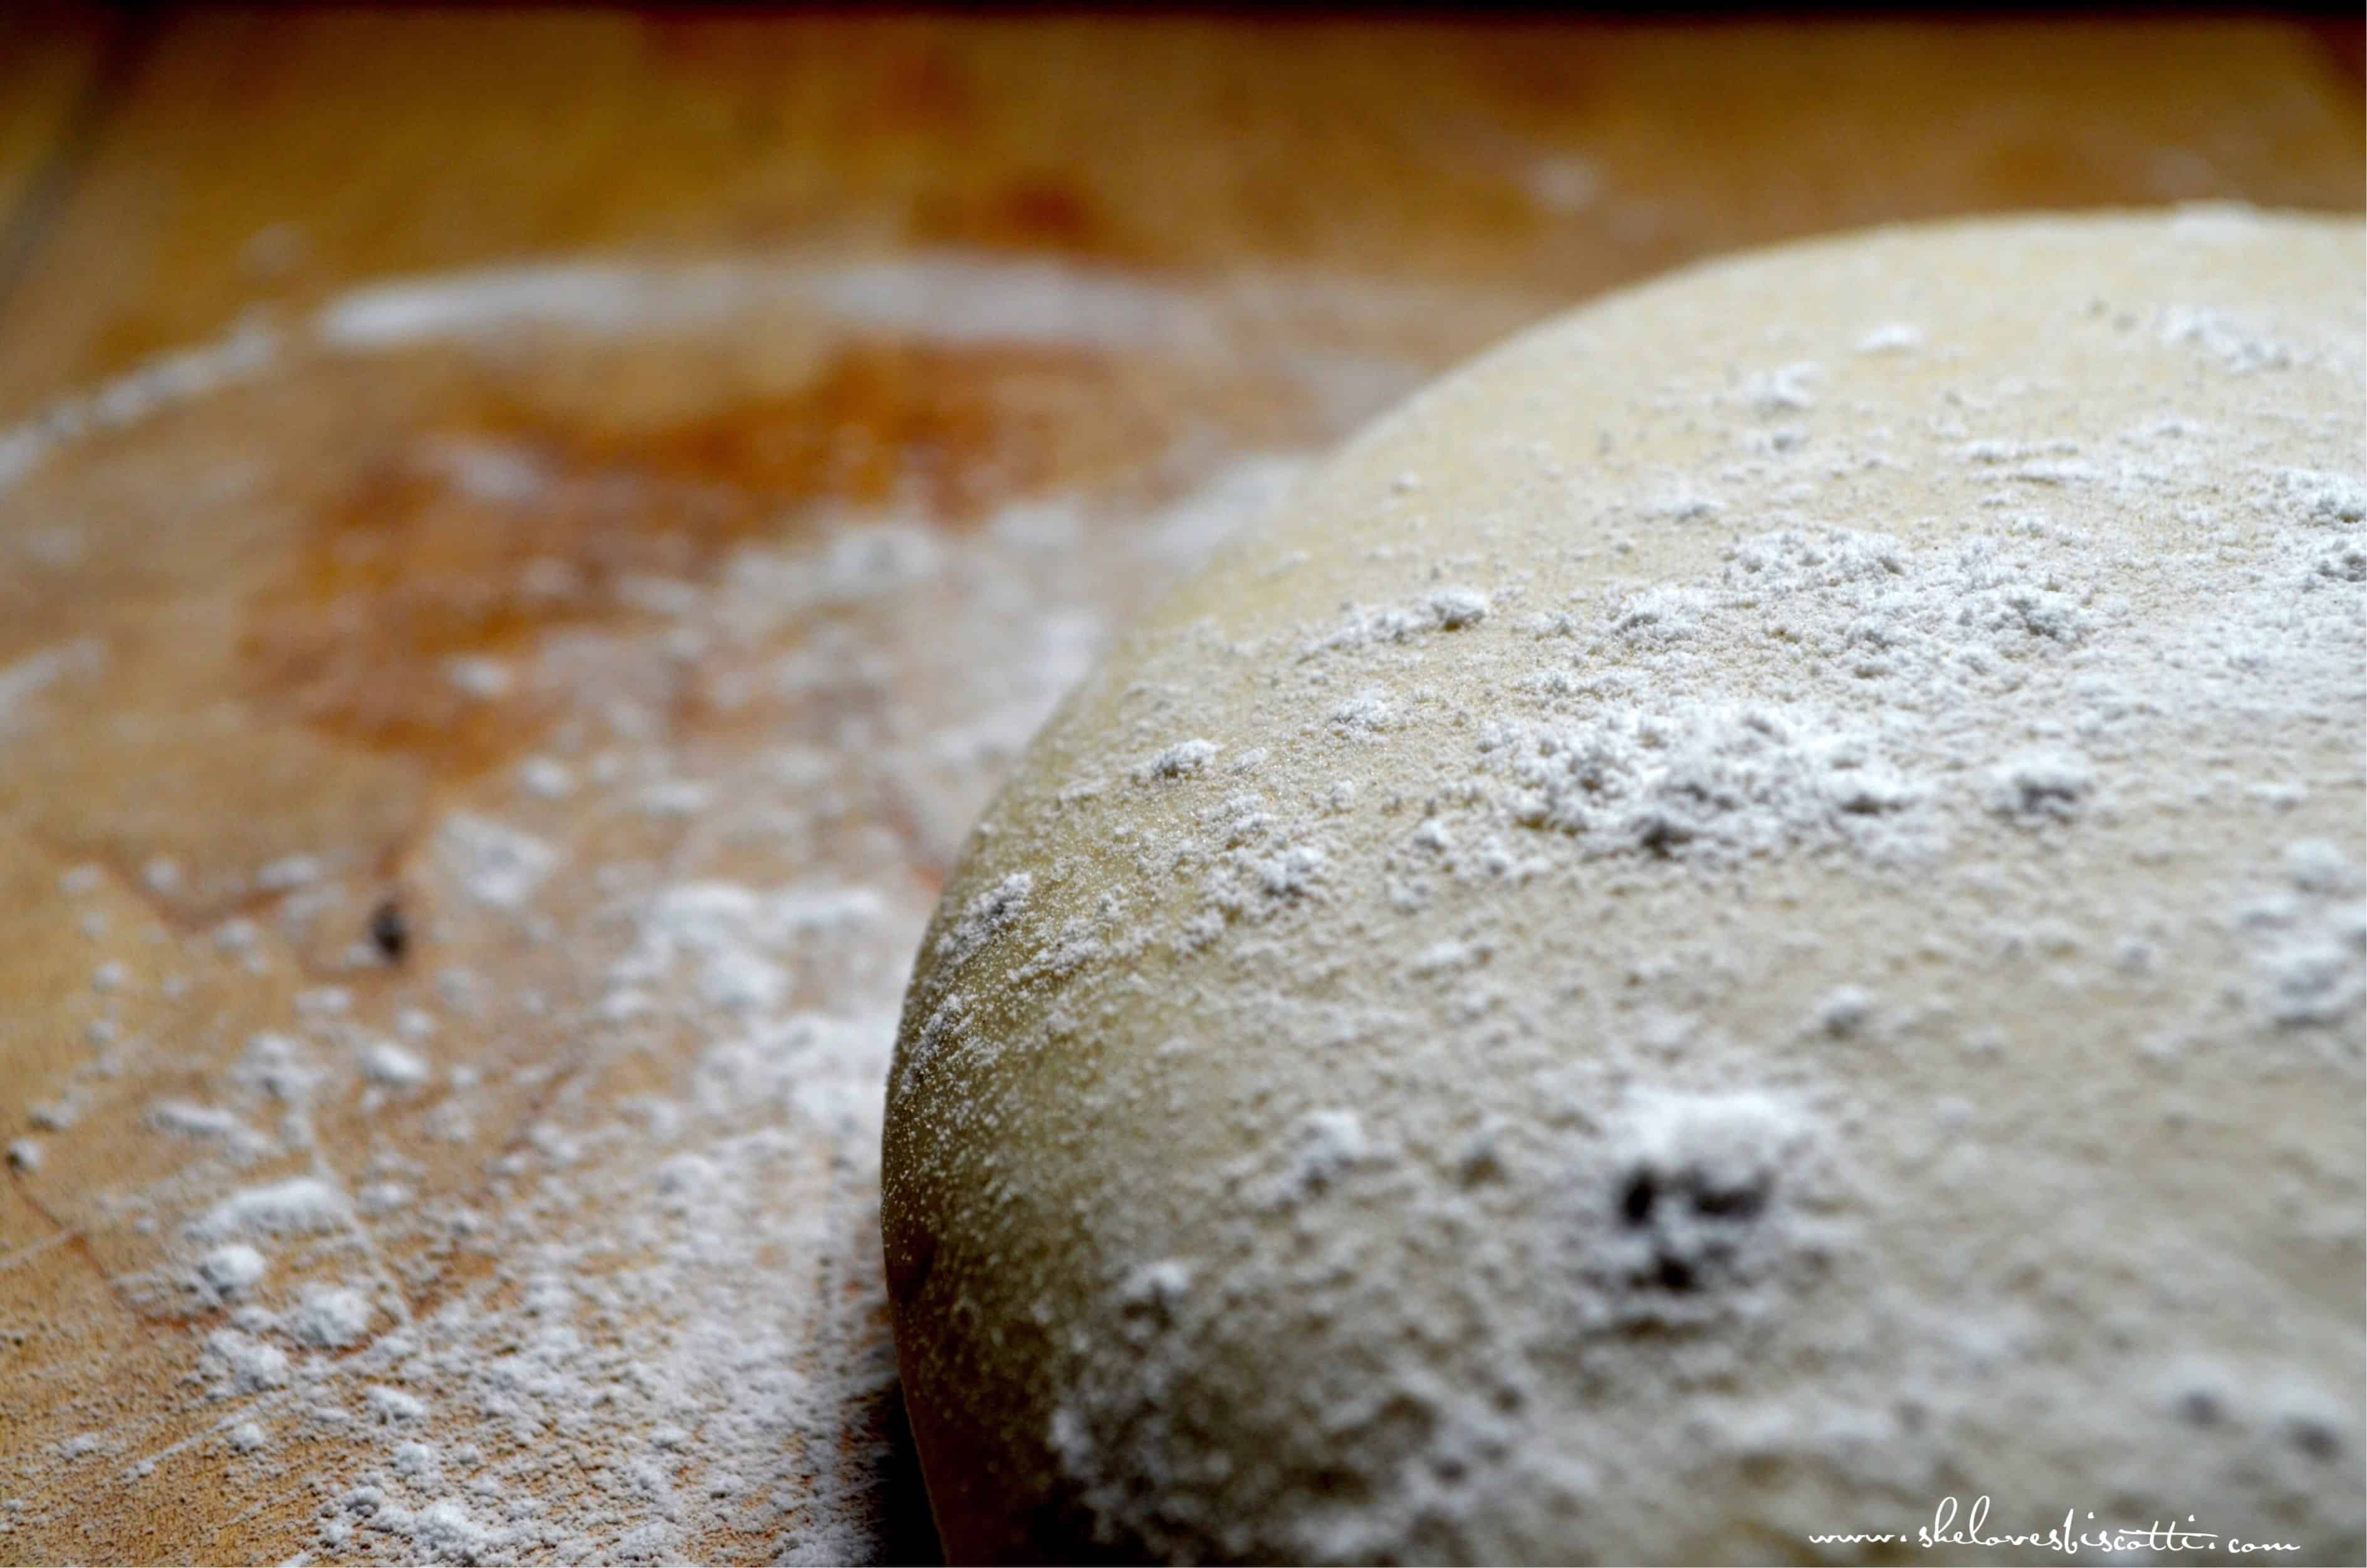 Close up photo of the ball of cavatelli dough.